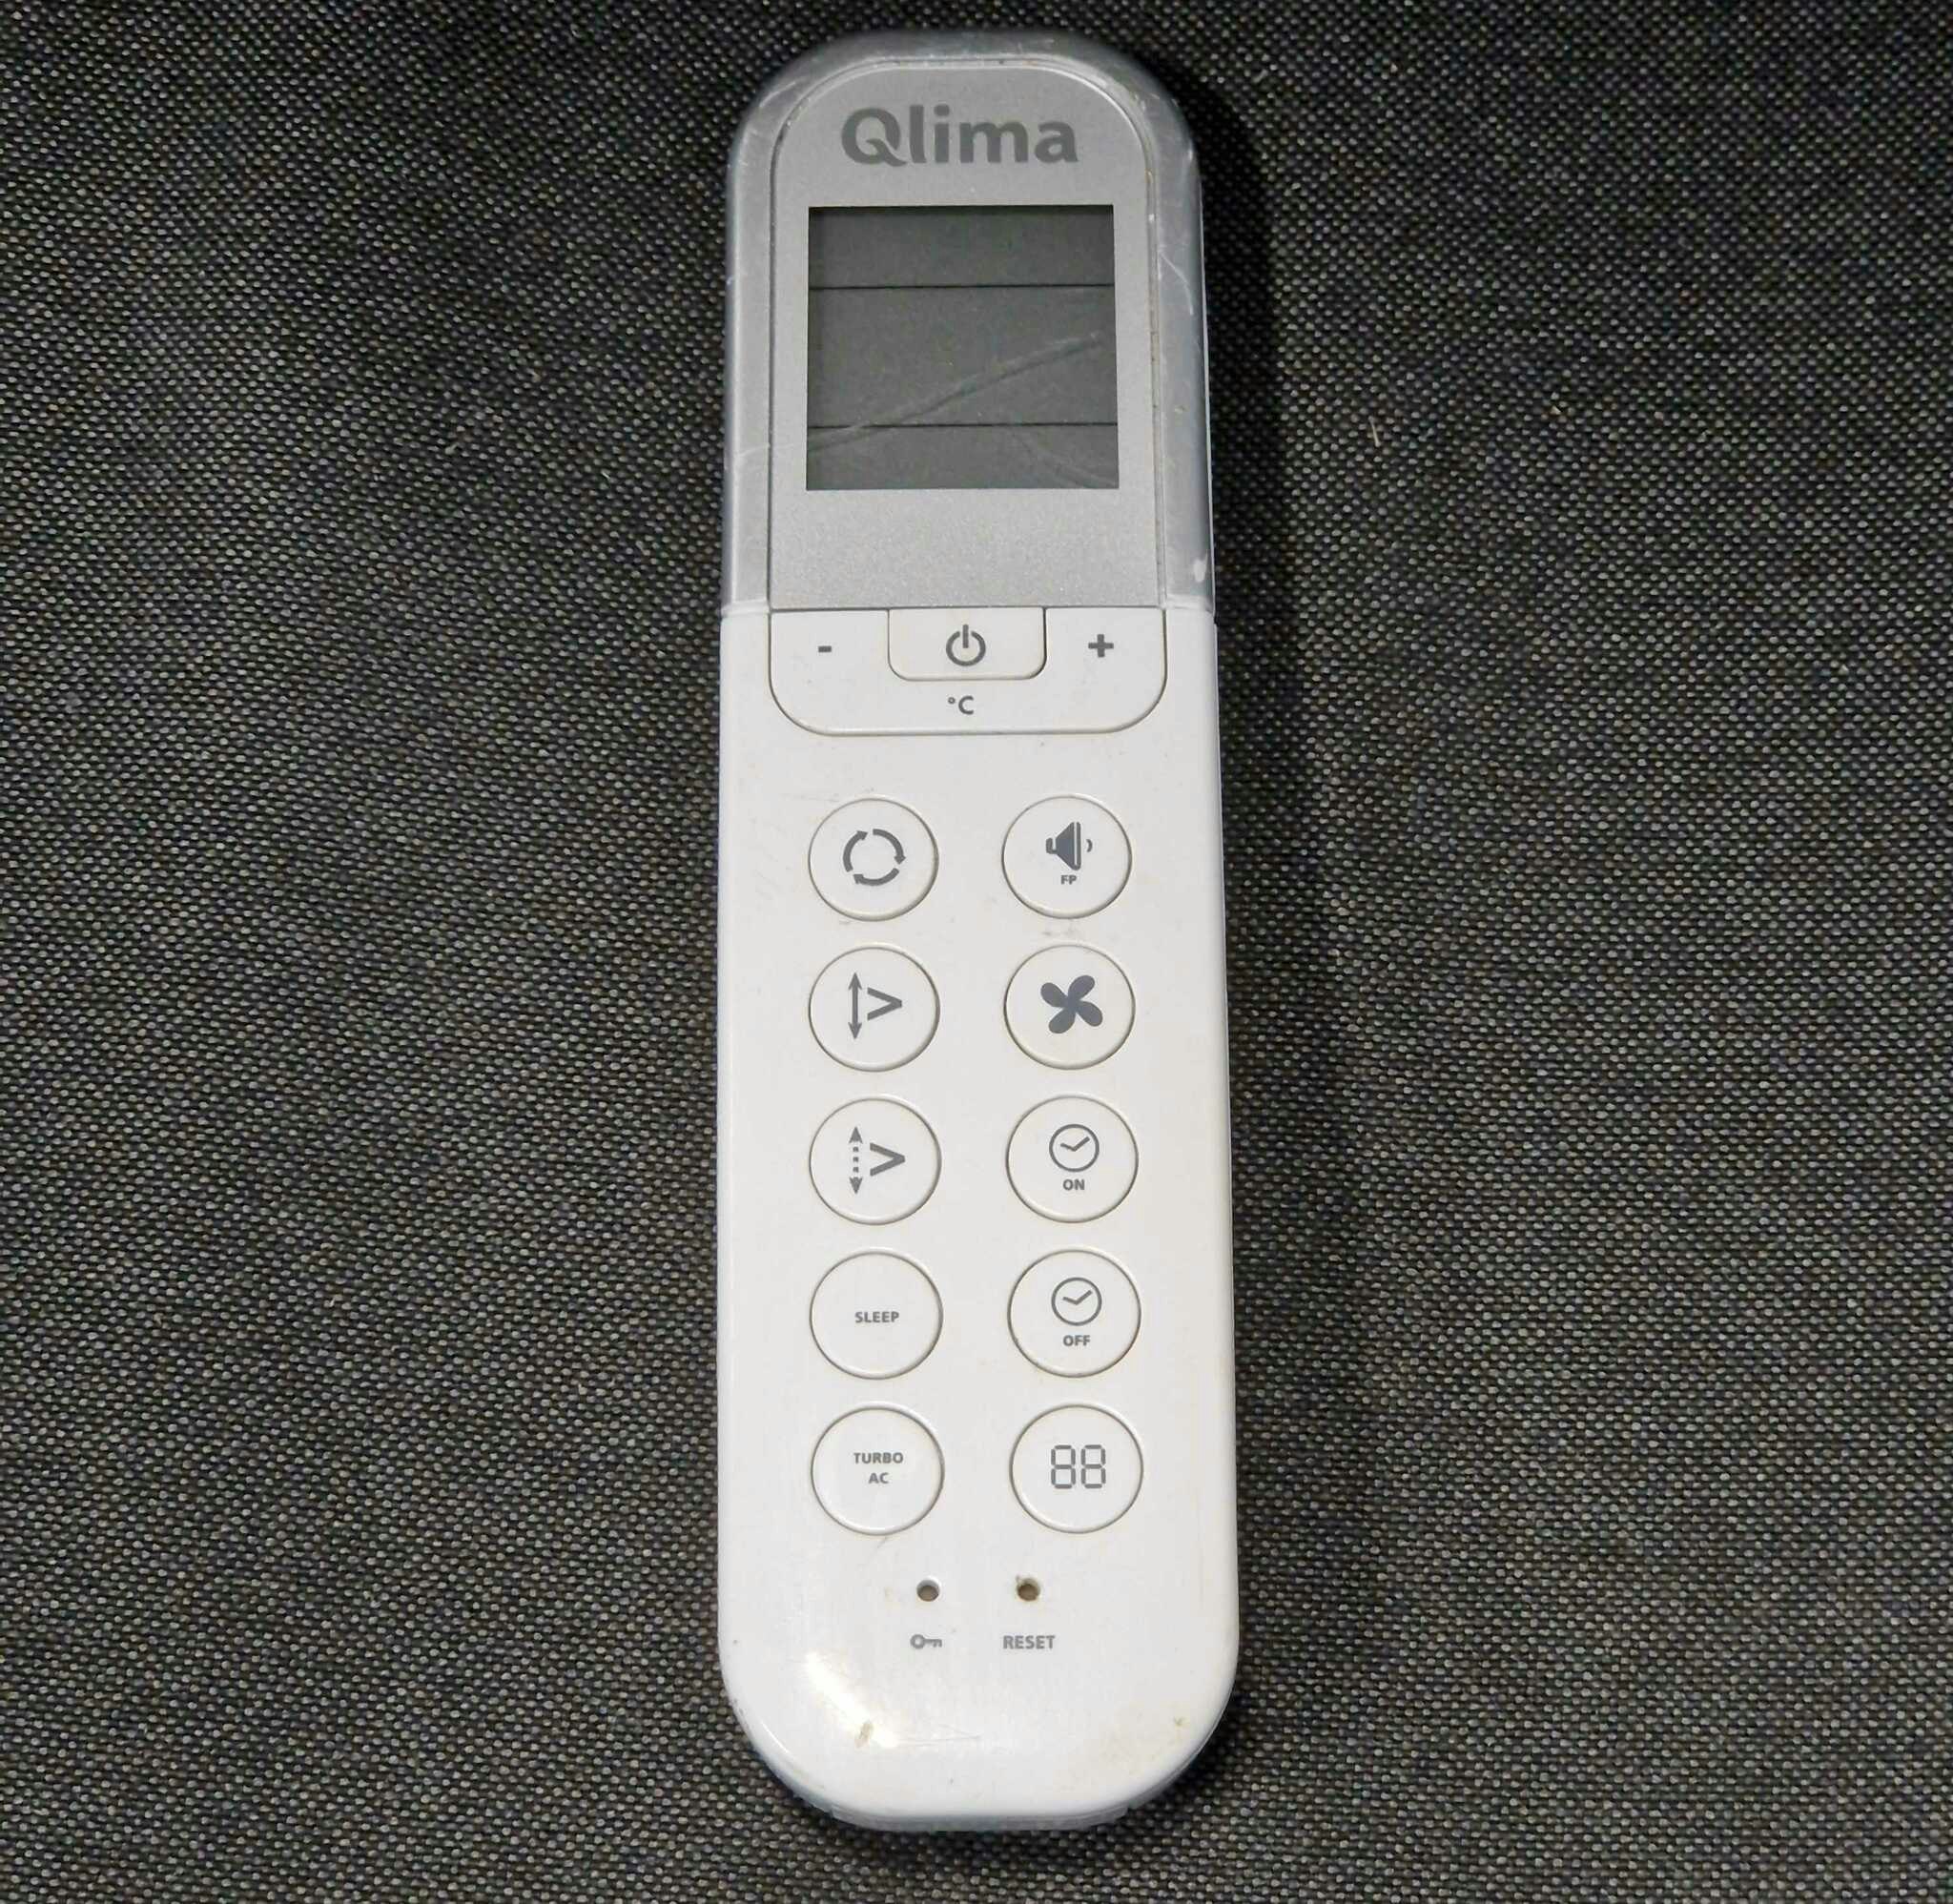 Qlima / Zibro Remote Control Part no. ABS10FP - Refurbished & Tested